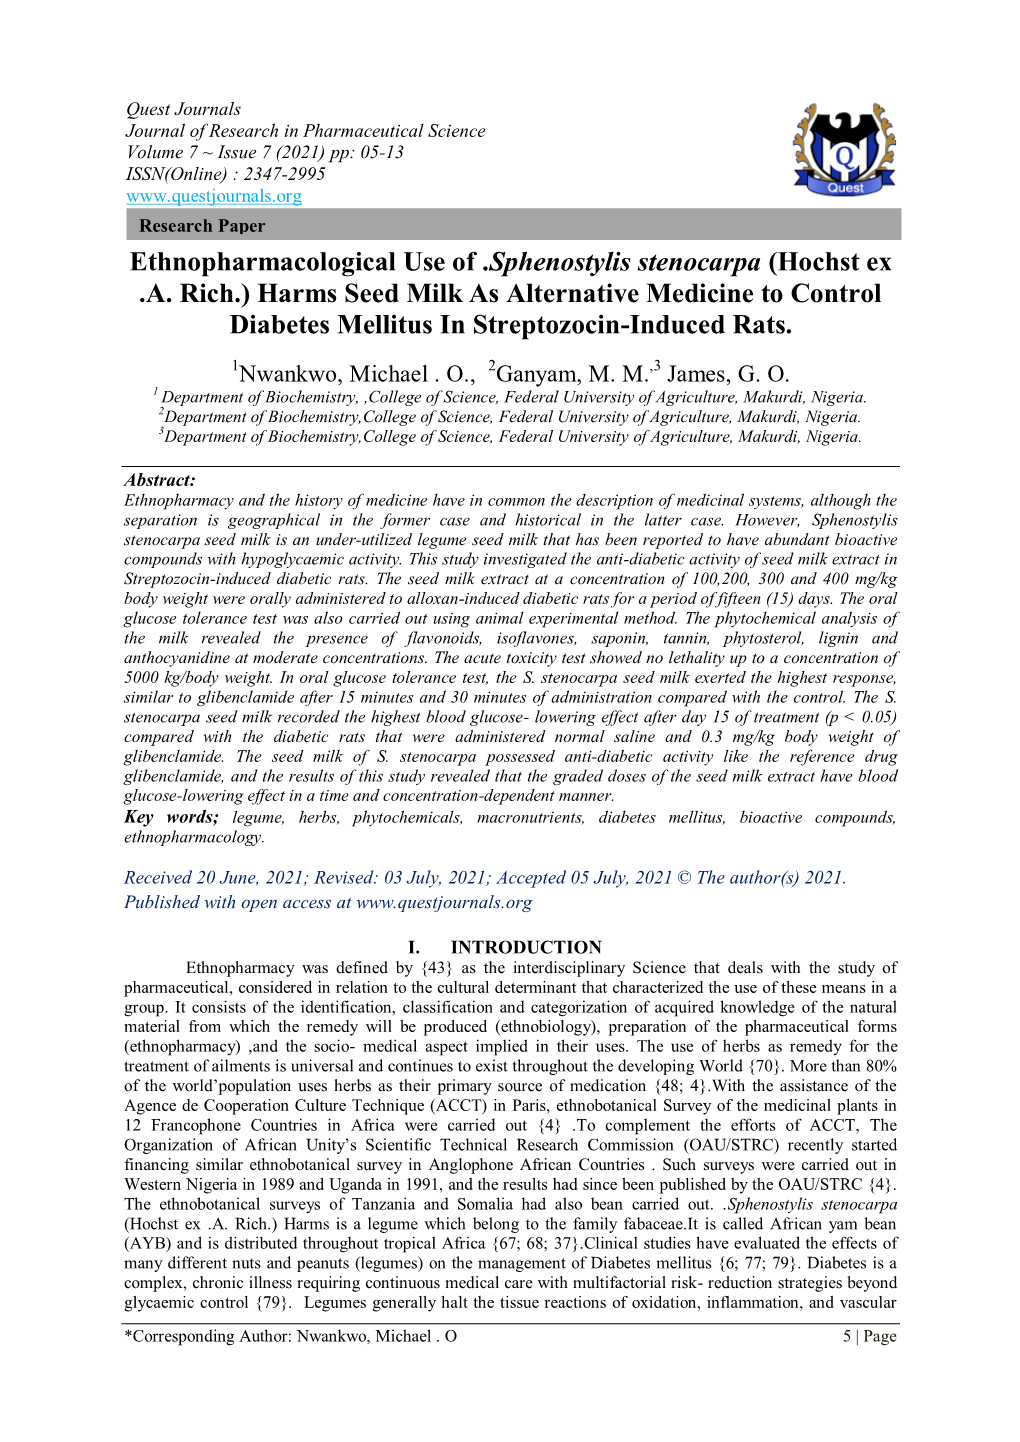 Ethnopharmacological Use of .Sphenostylis Stenocarpa (Hochst Ex .A